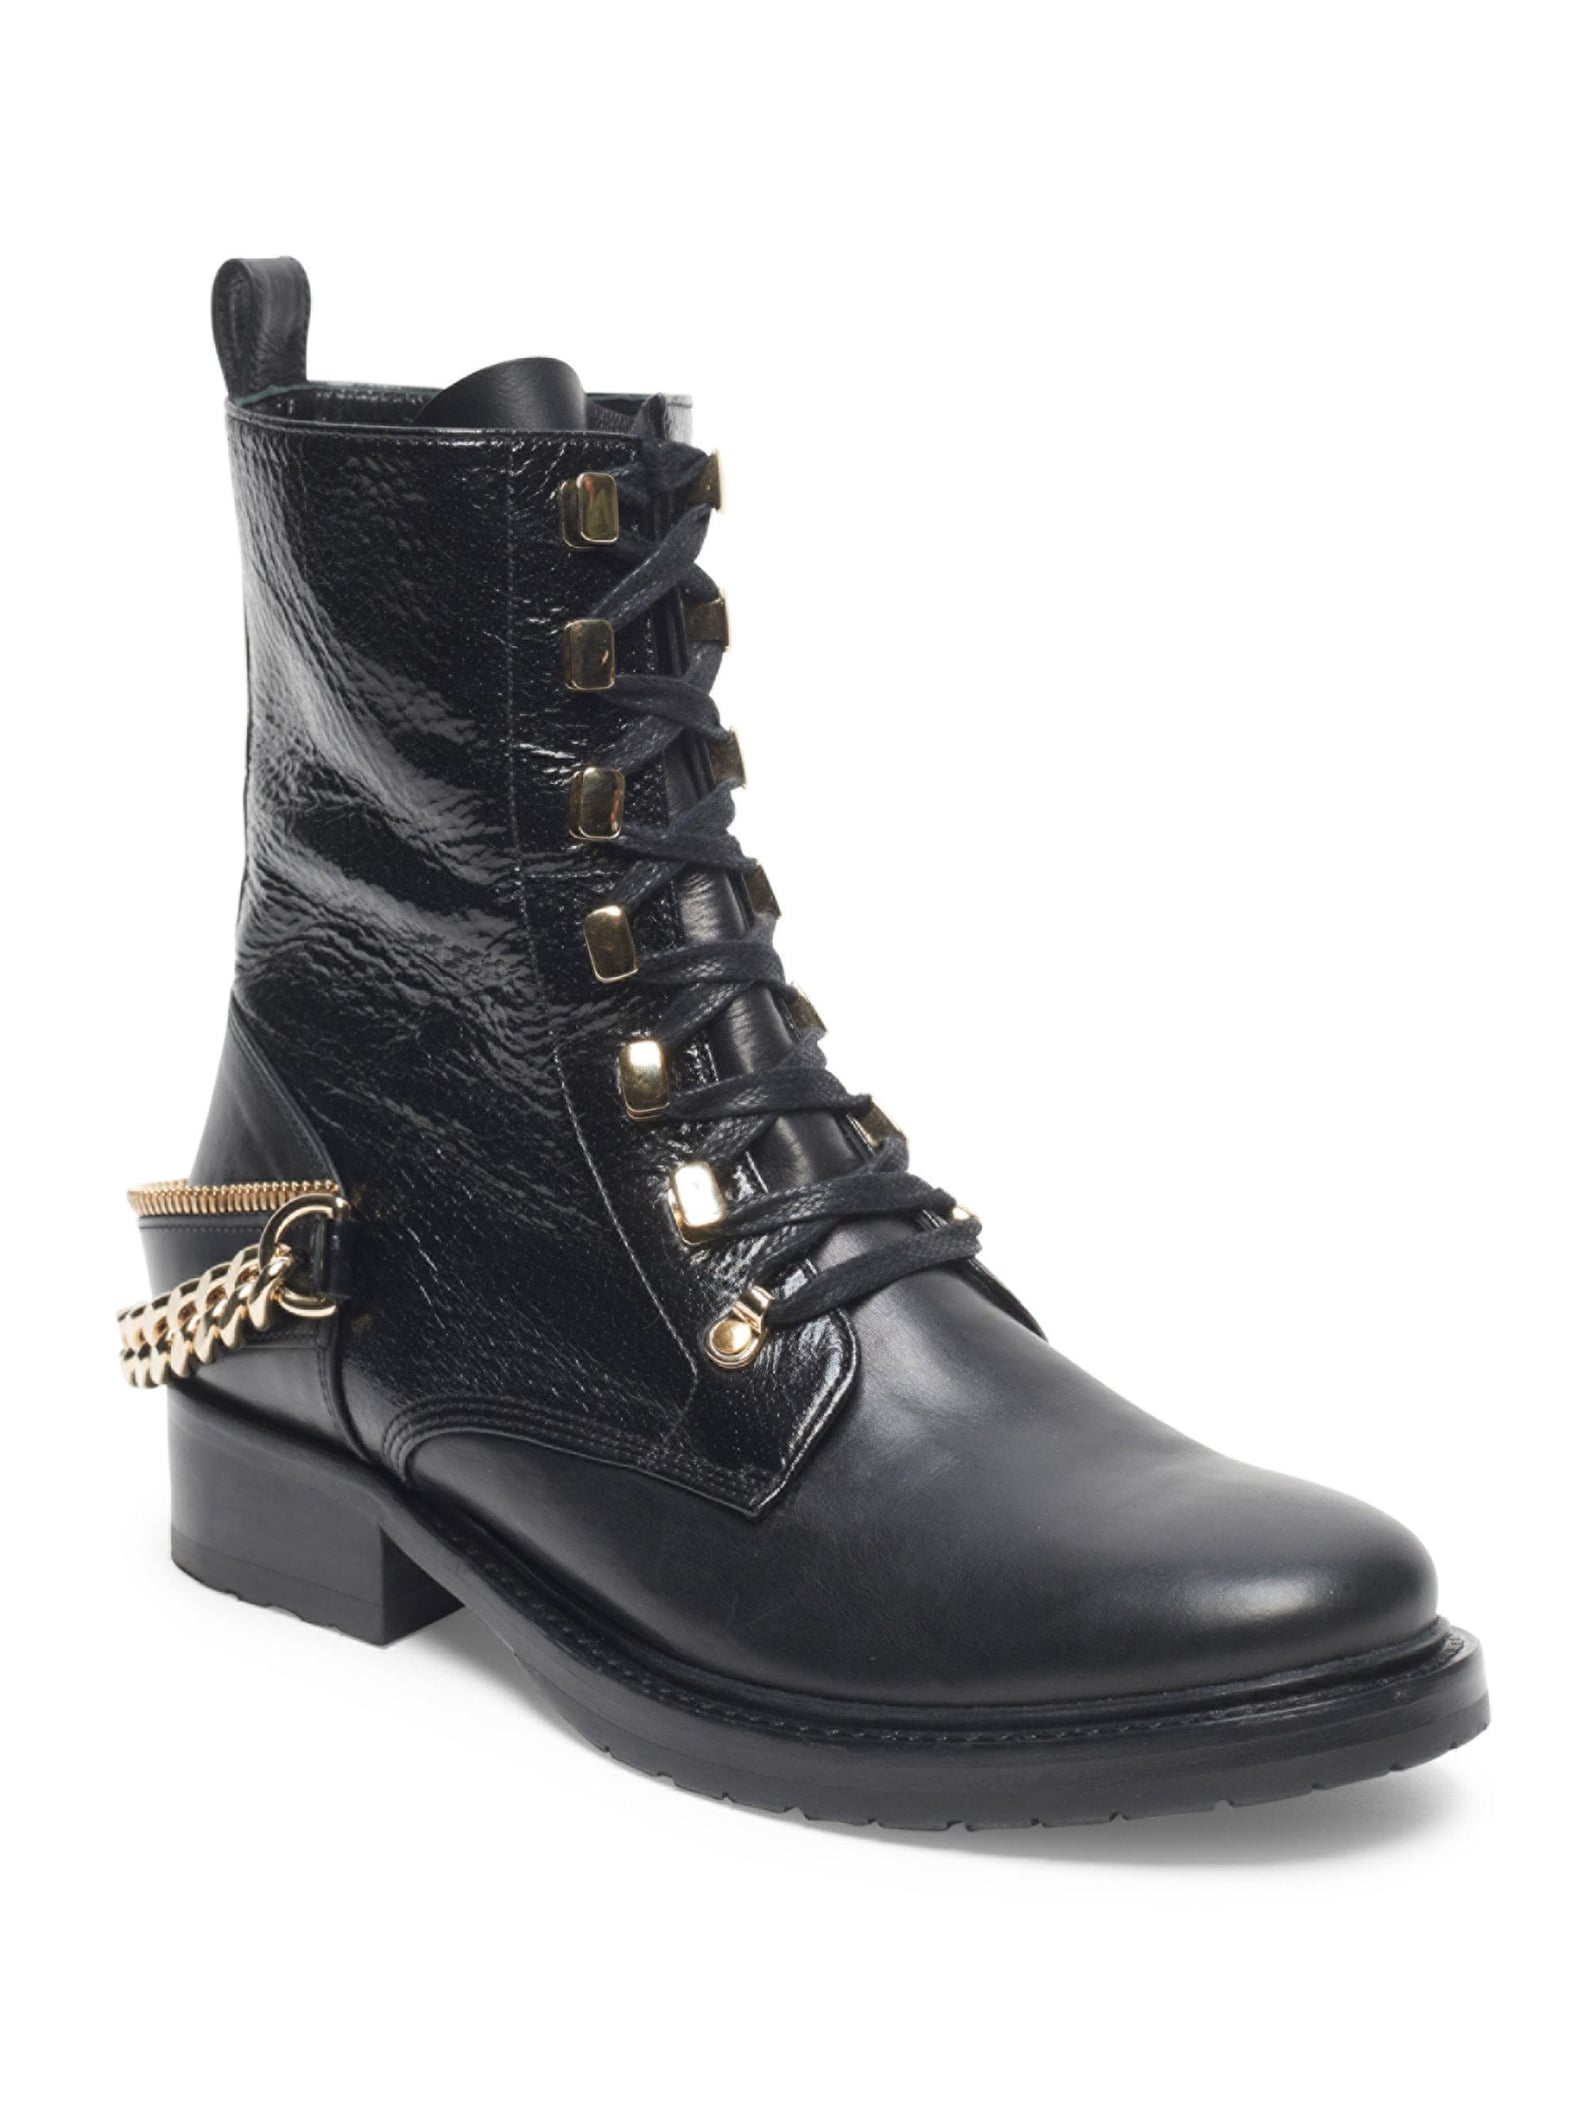 Taylor Swift's Black Lanvin Boots | POPSUGAR Fashion